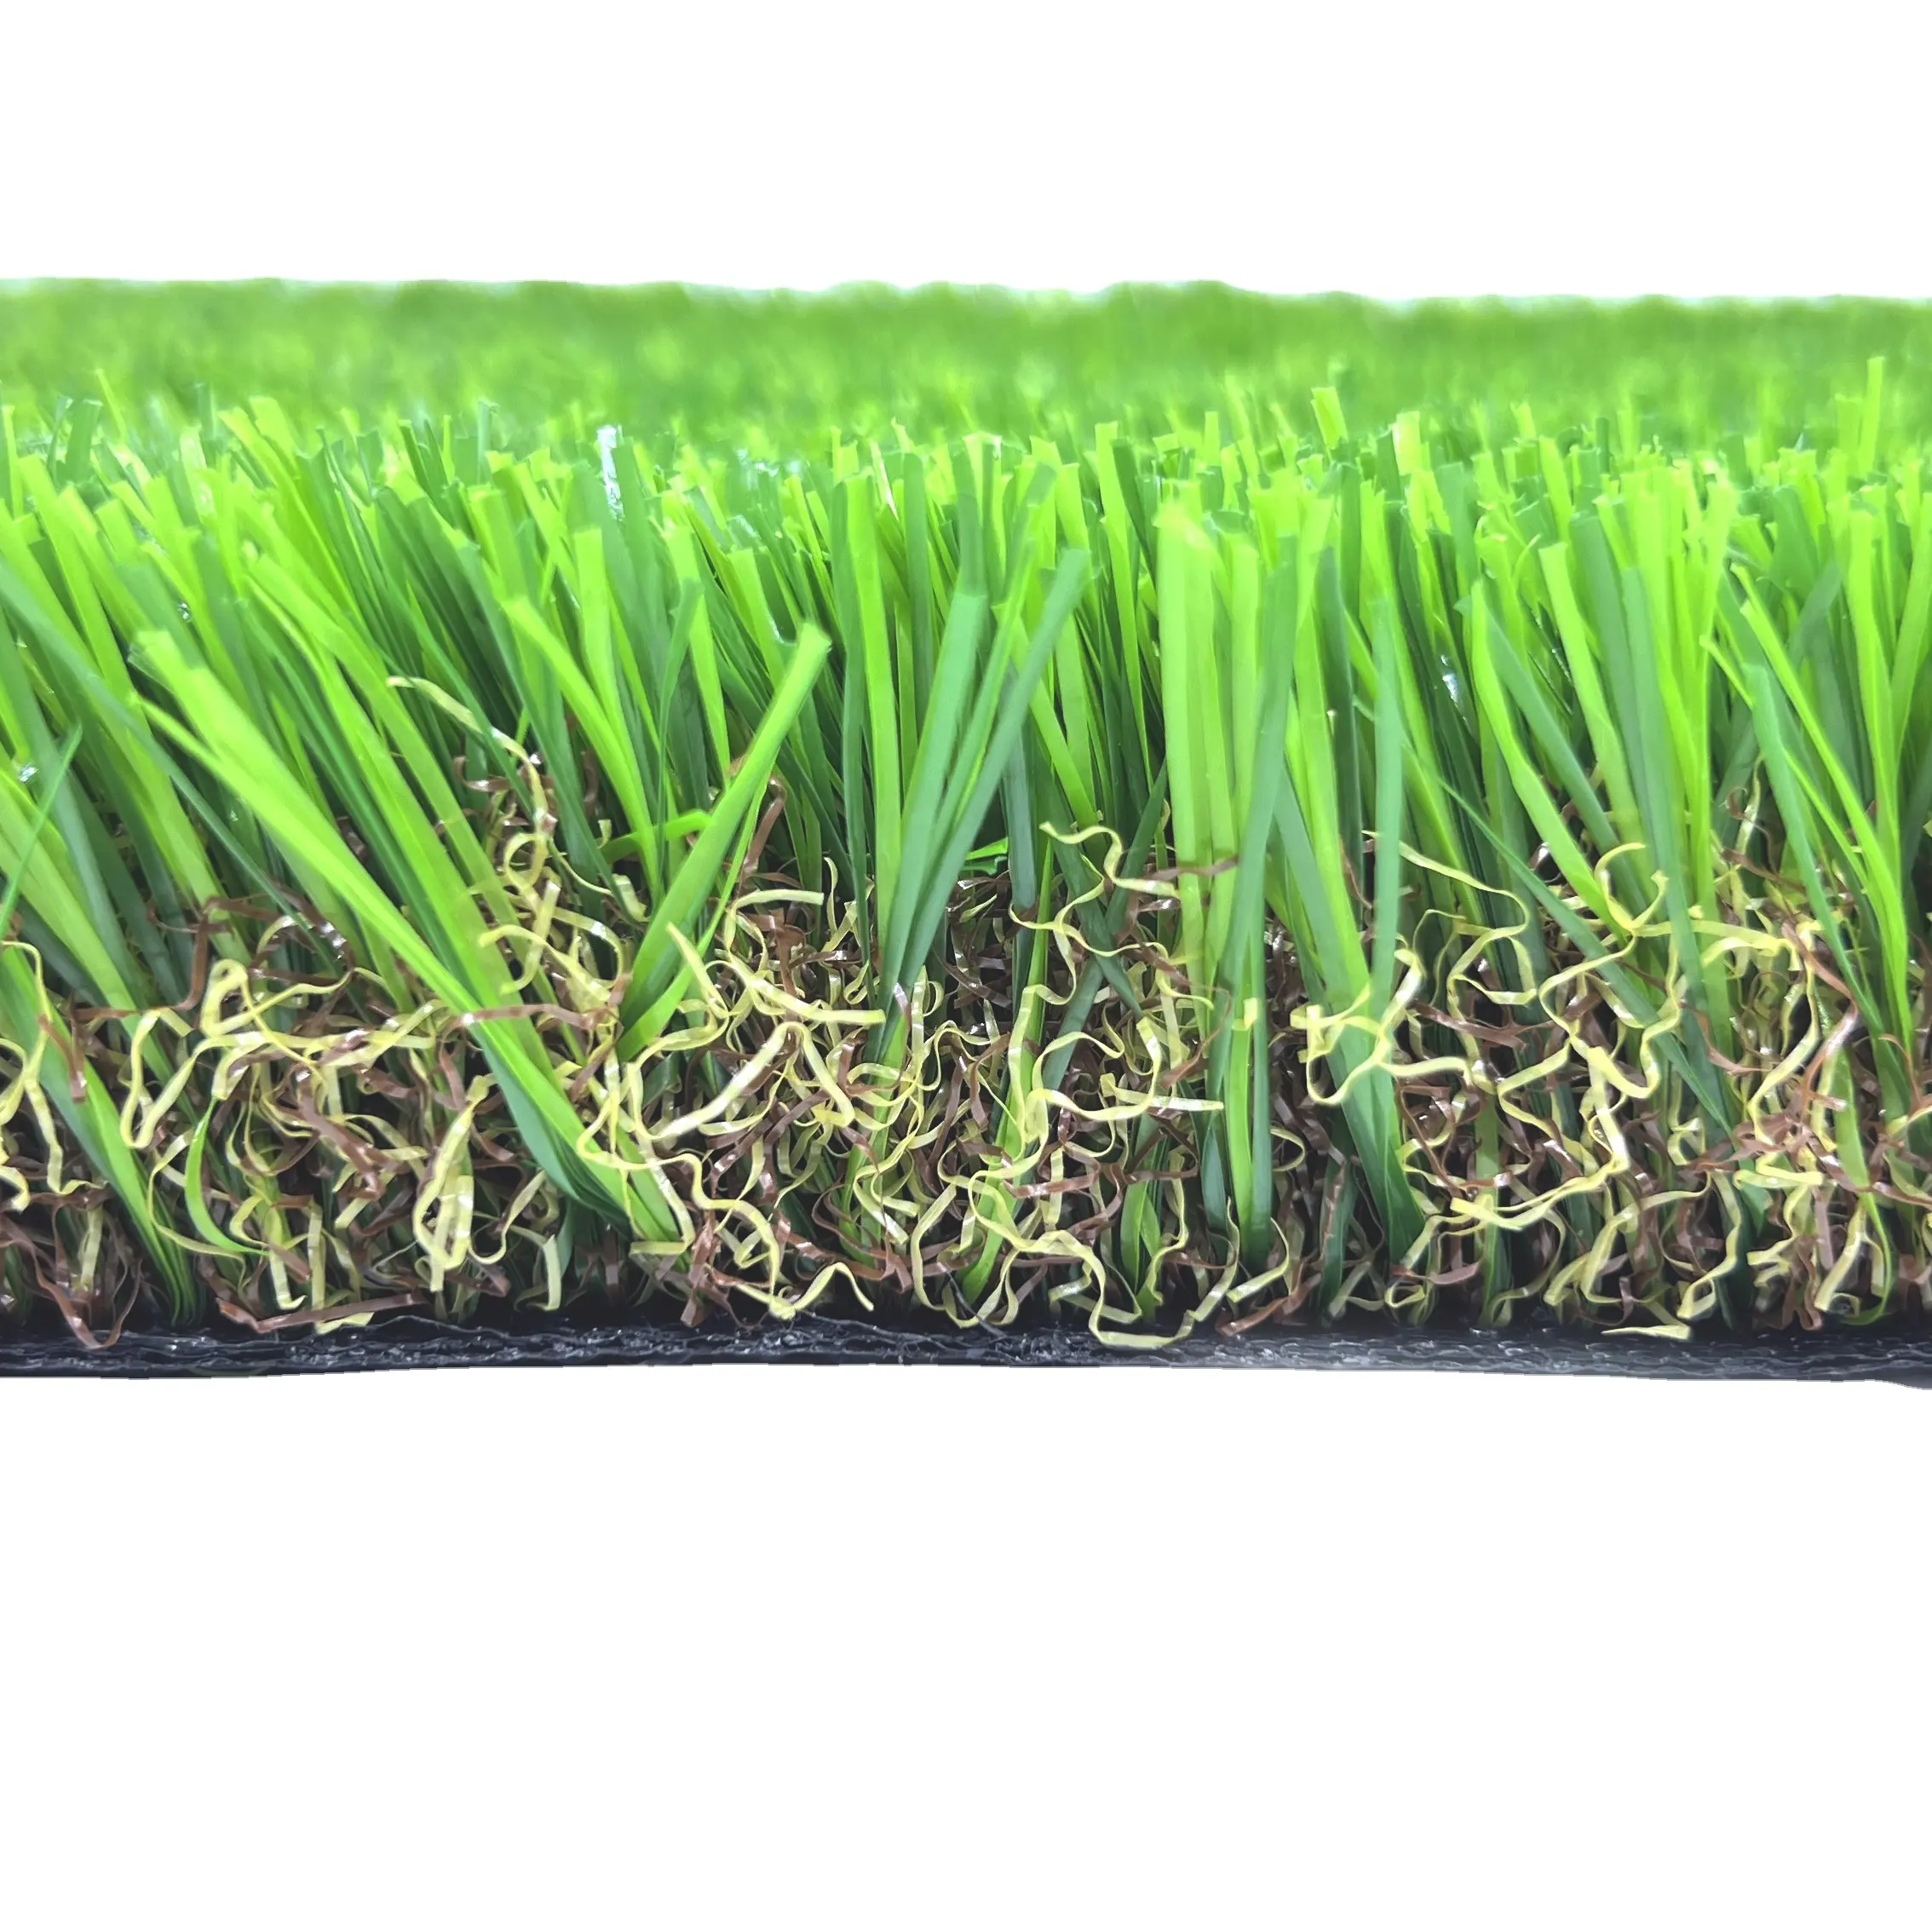 Outdoor high-end garden decorative grass green artificial grass synthetic grass UV resistant turf